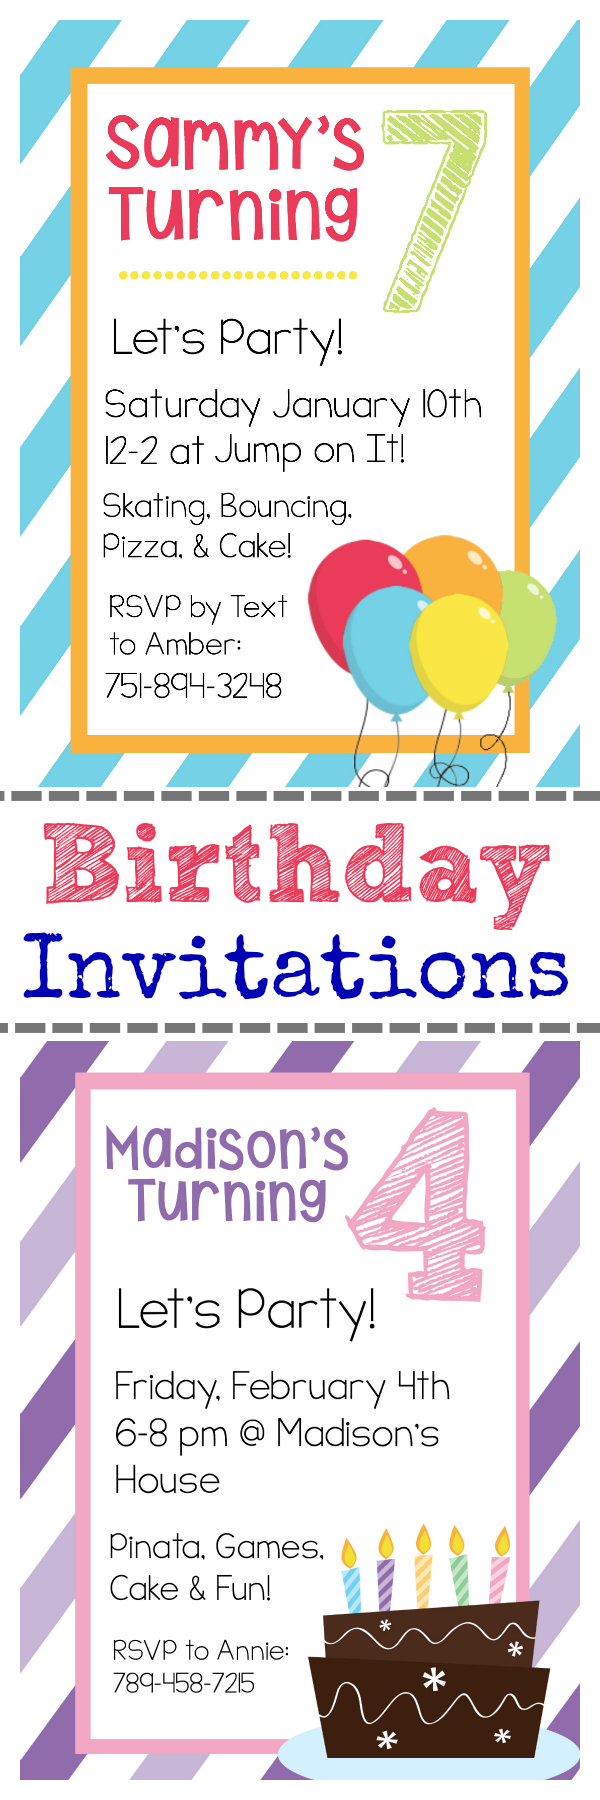 Free Printable Birthday Invitation Templates - Free Printable Birthday Invitations